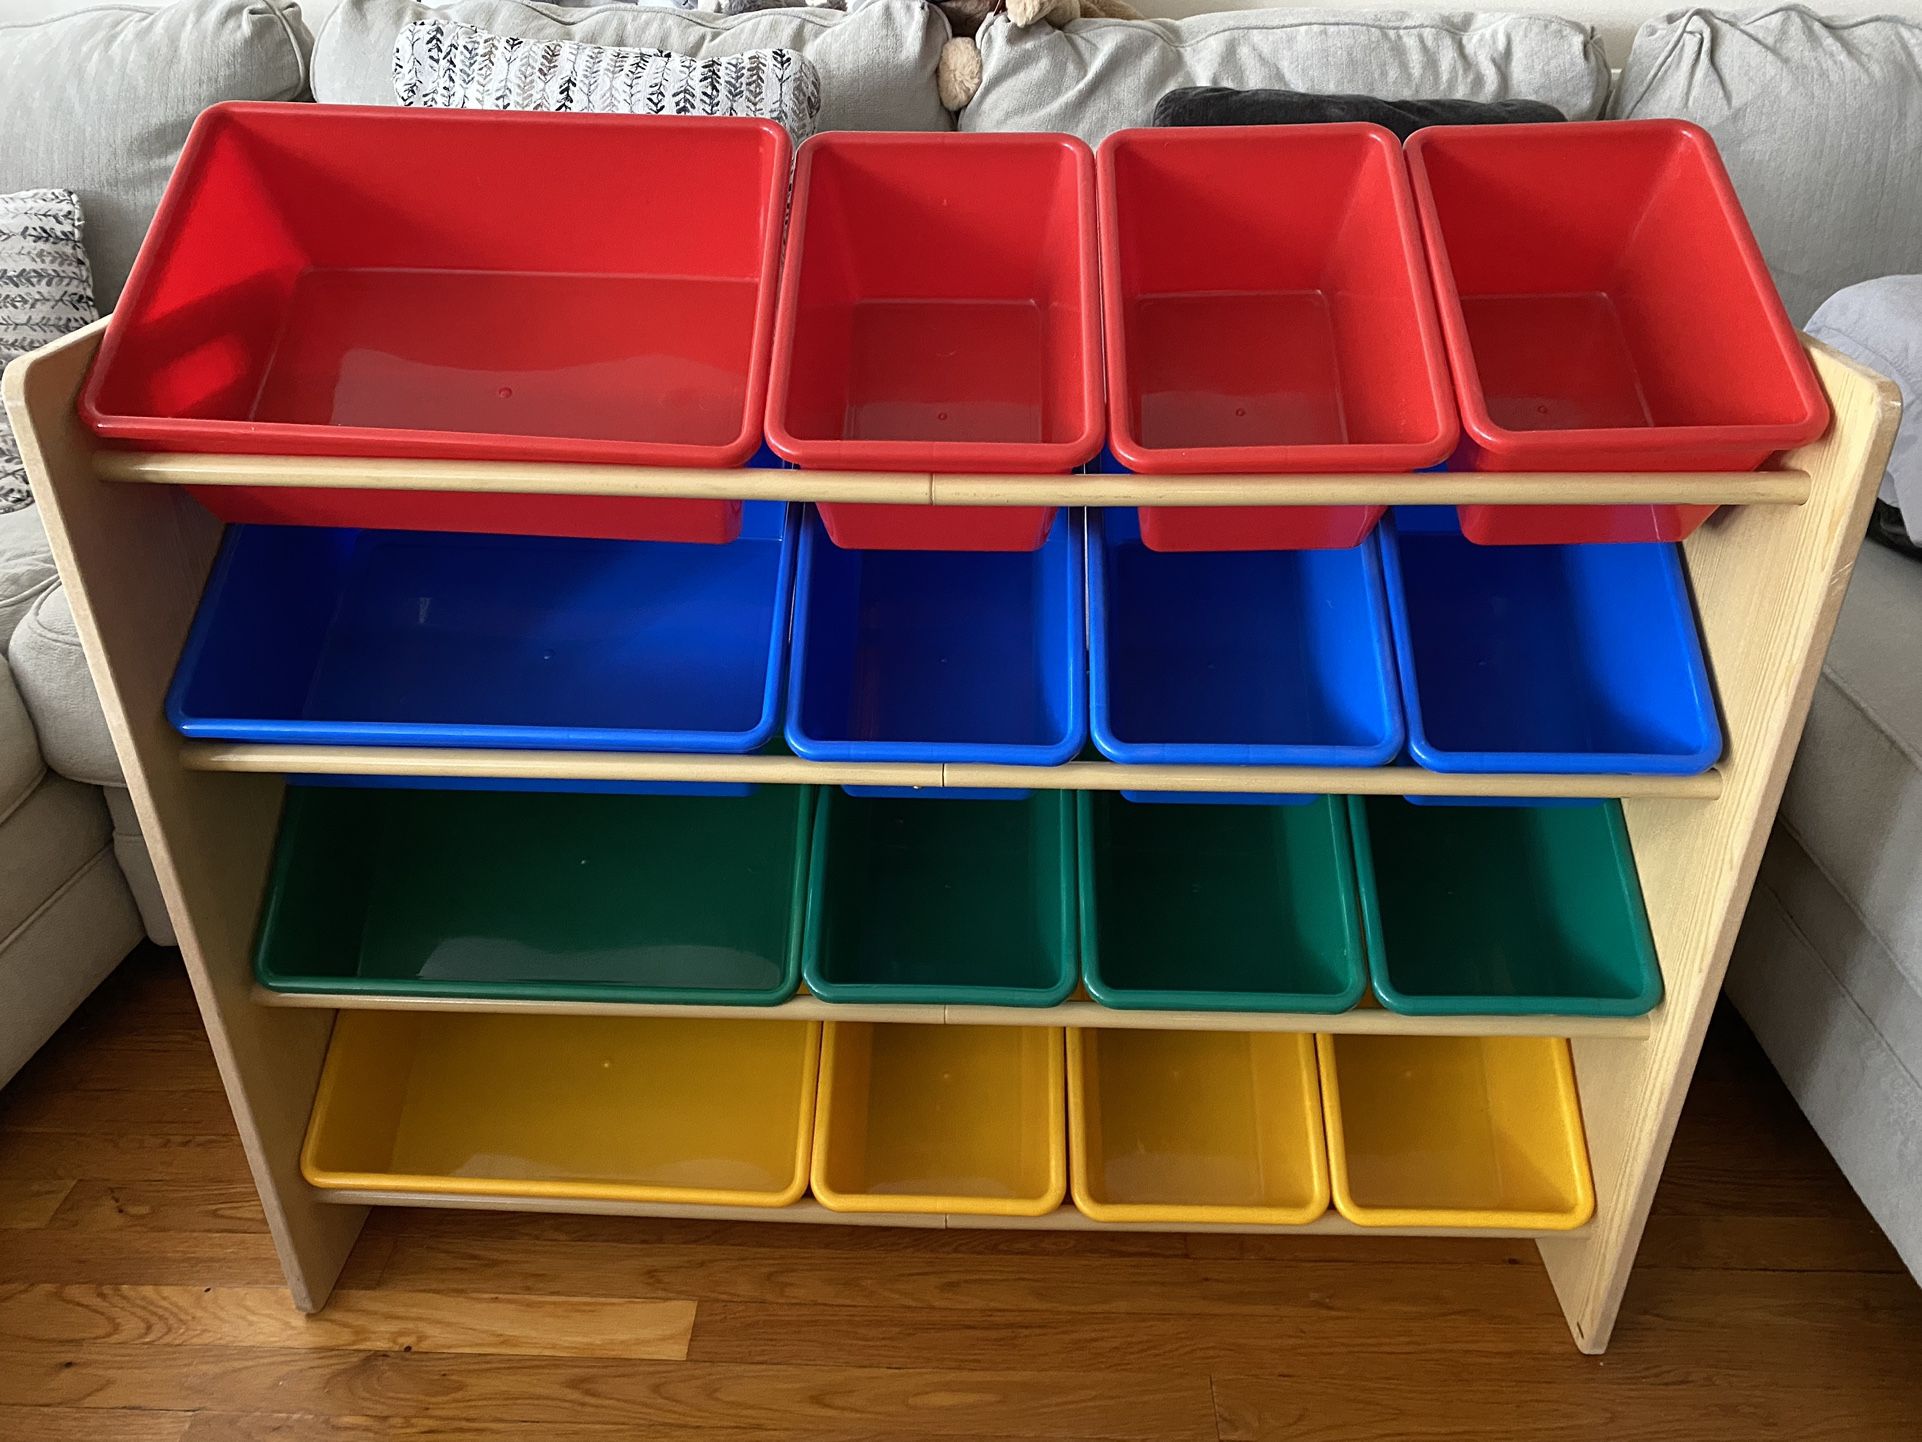 Kids Toy Story Storage Organizer With 16 Bins Multicolored 